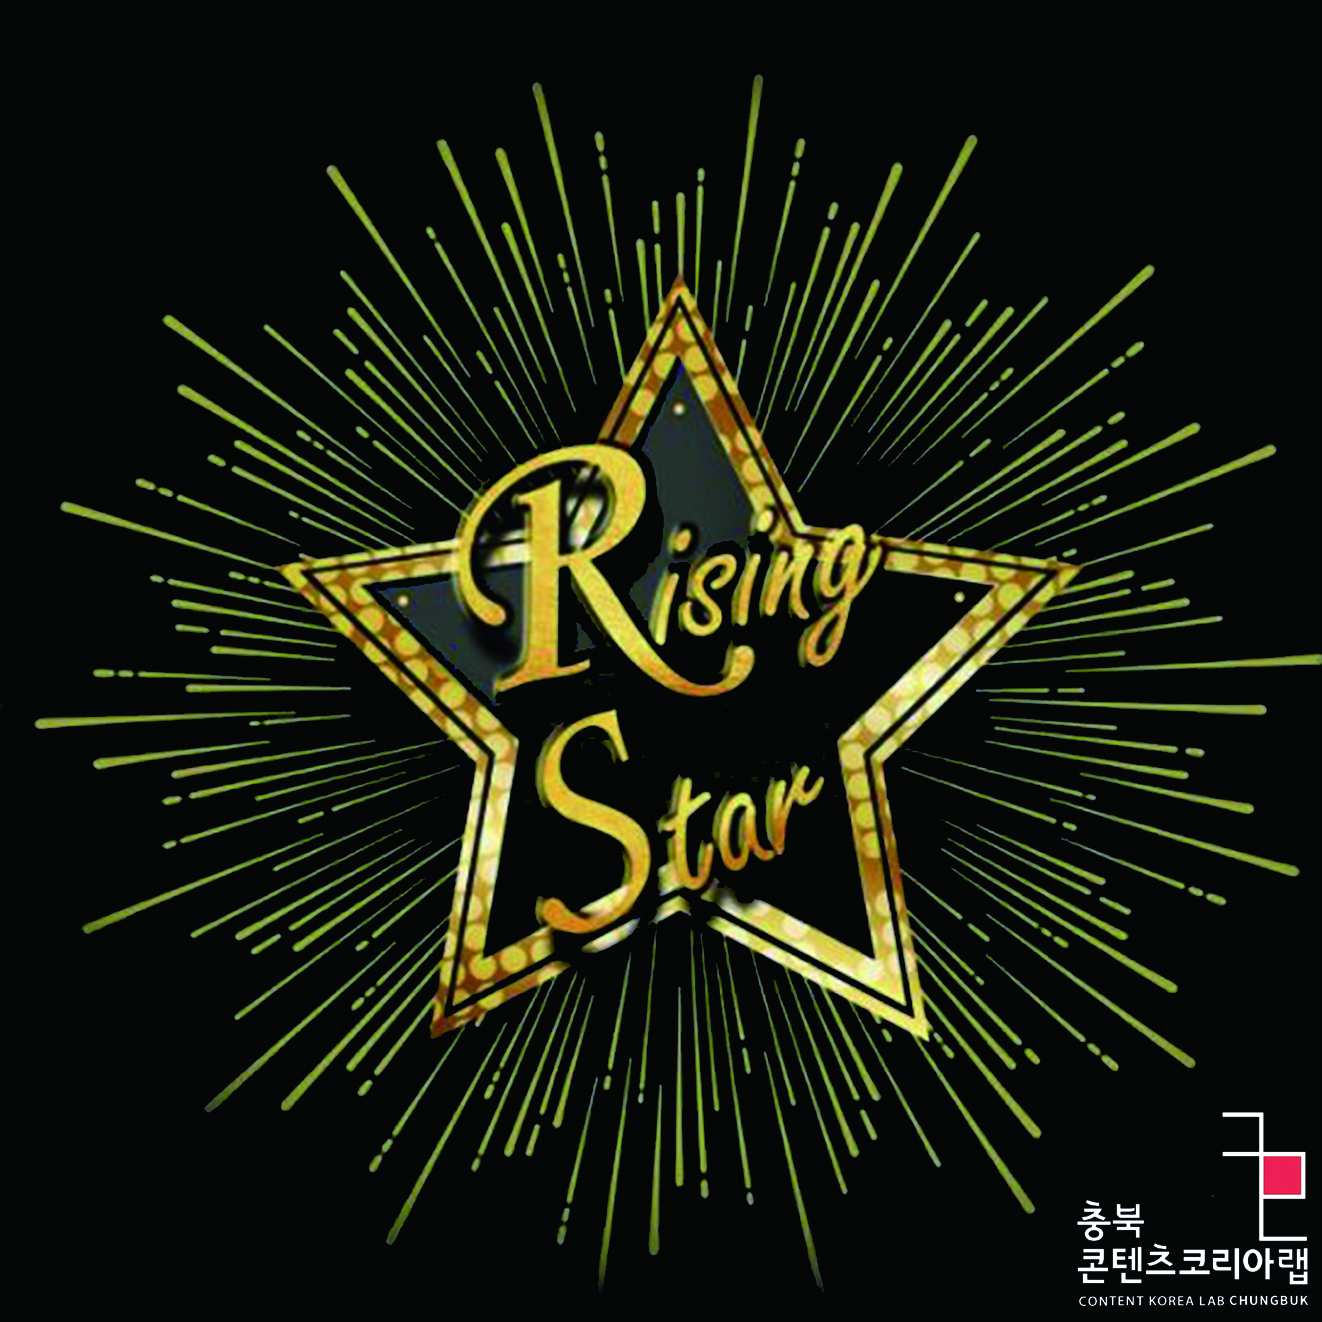 Rising Star 2018